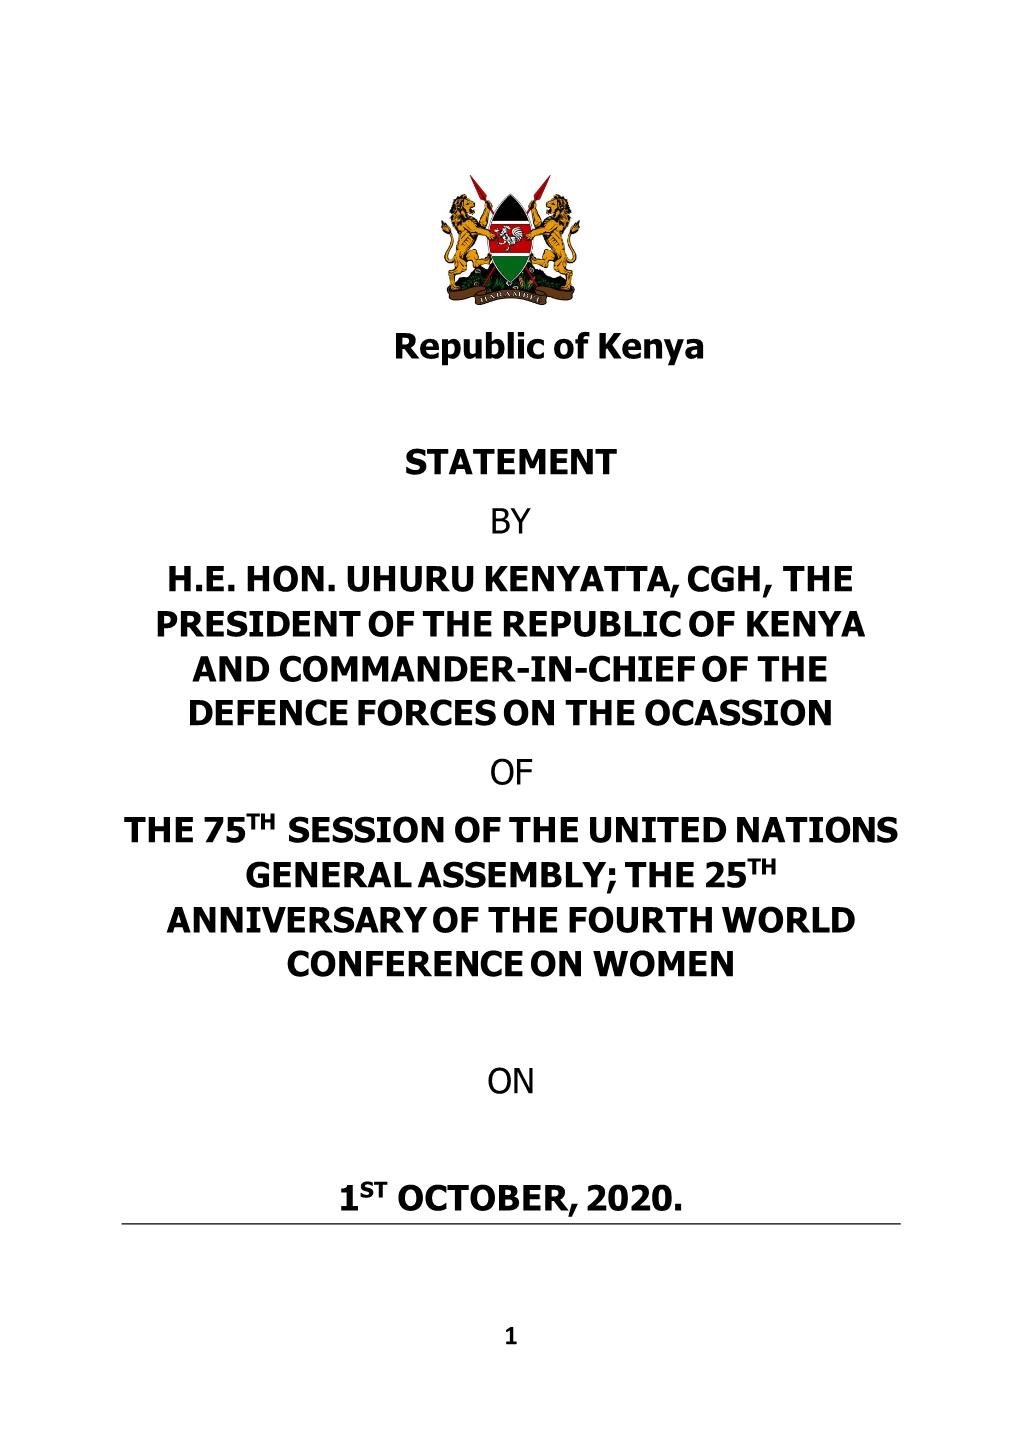 Republic of Kenya STATEMENT by H.E. HON. UHURU KENYATTA